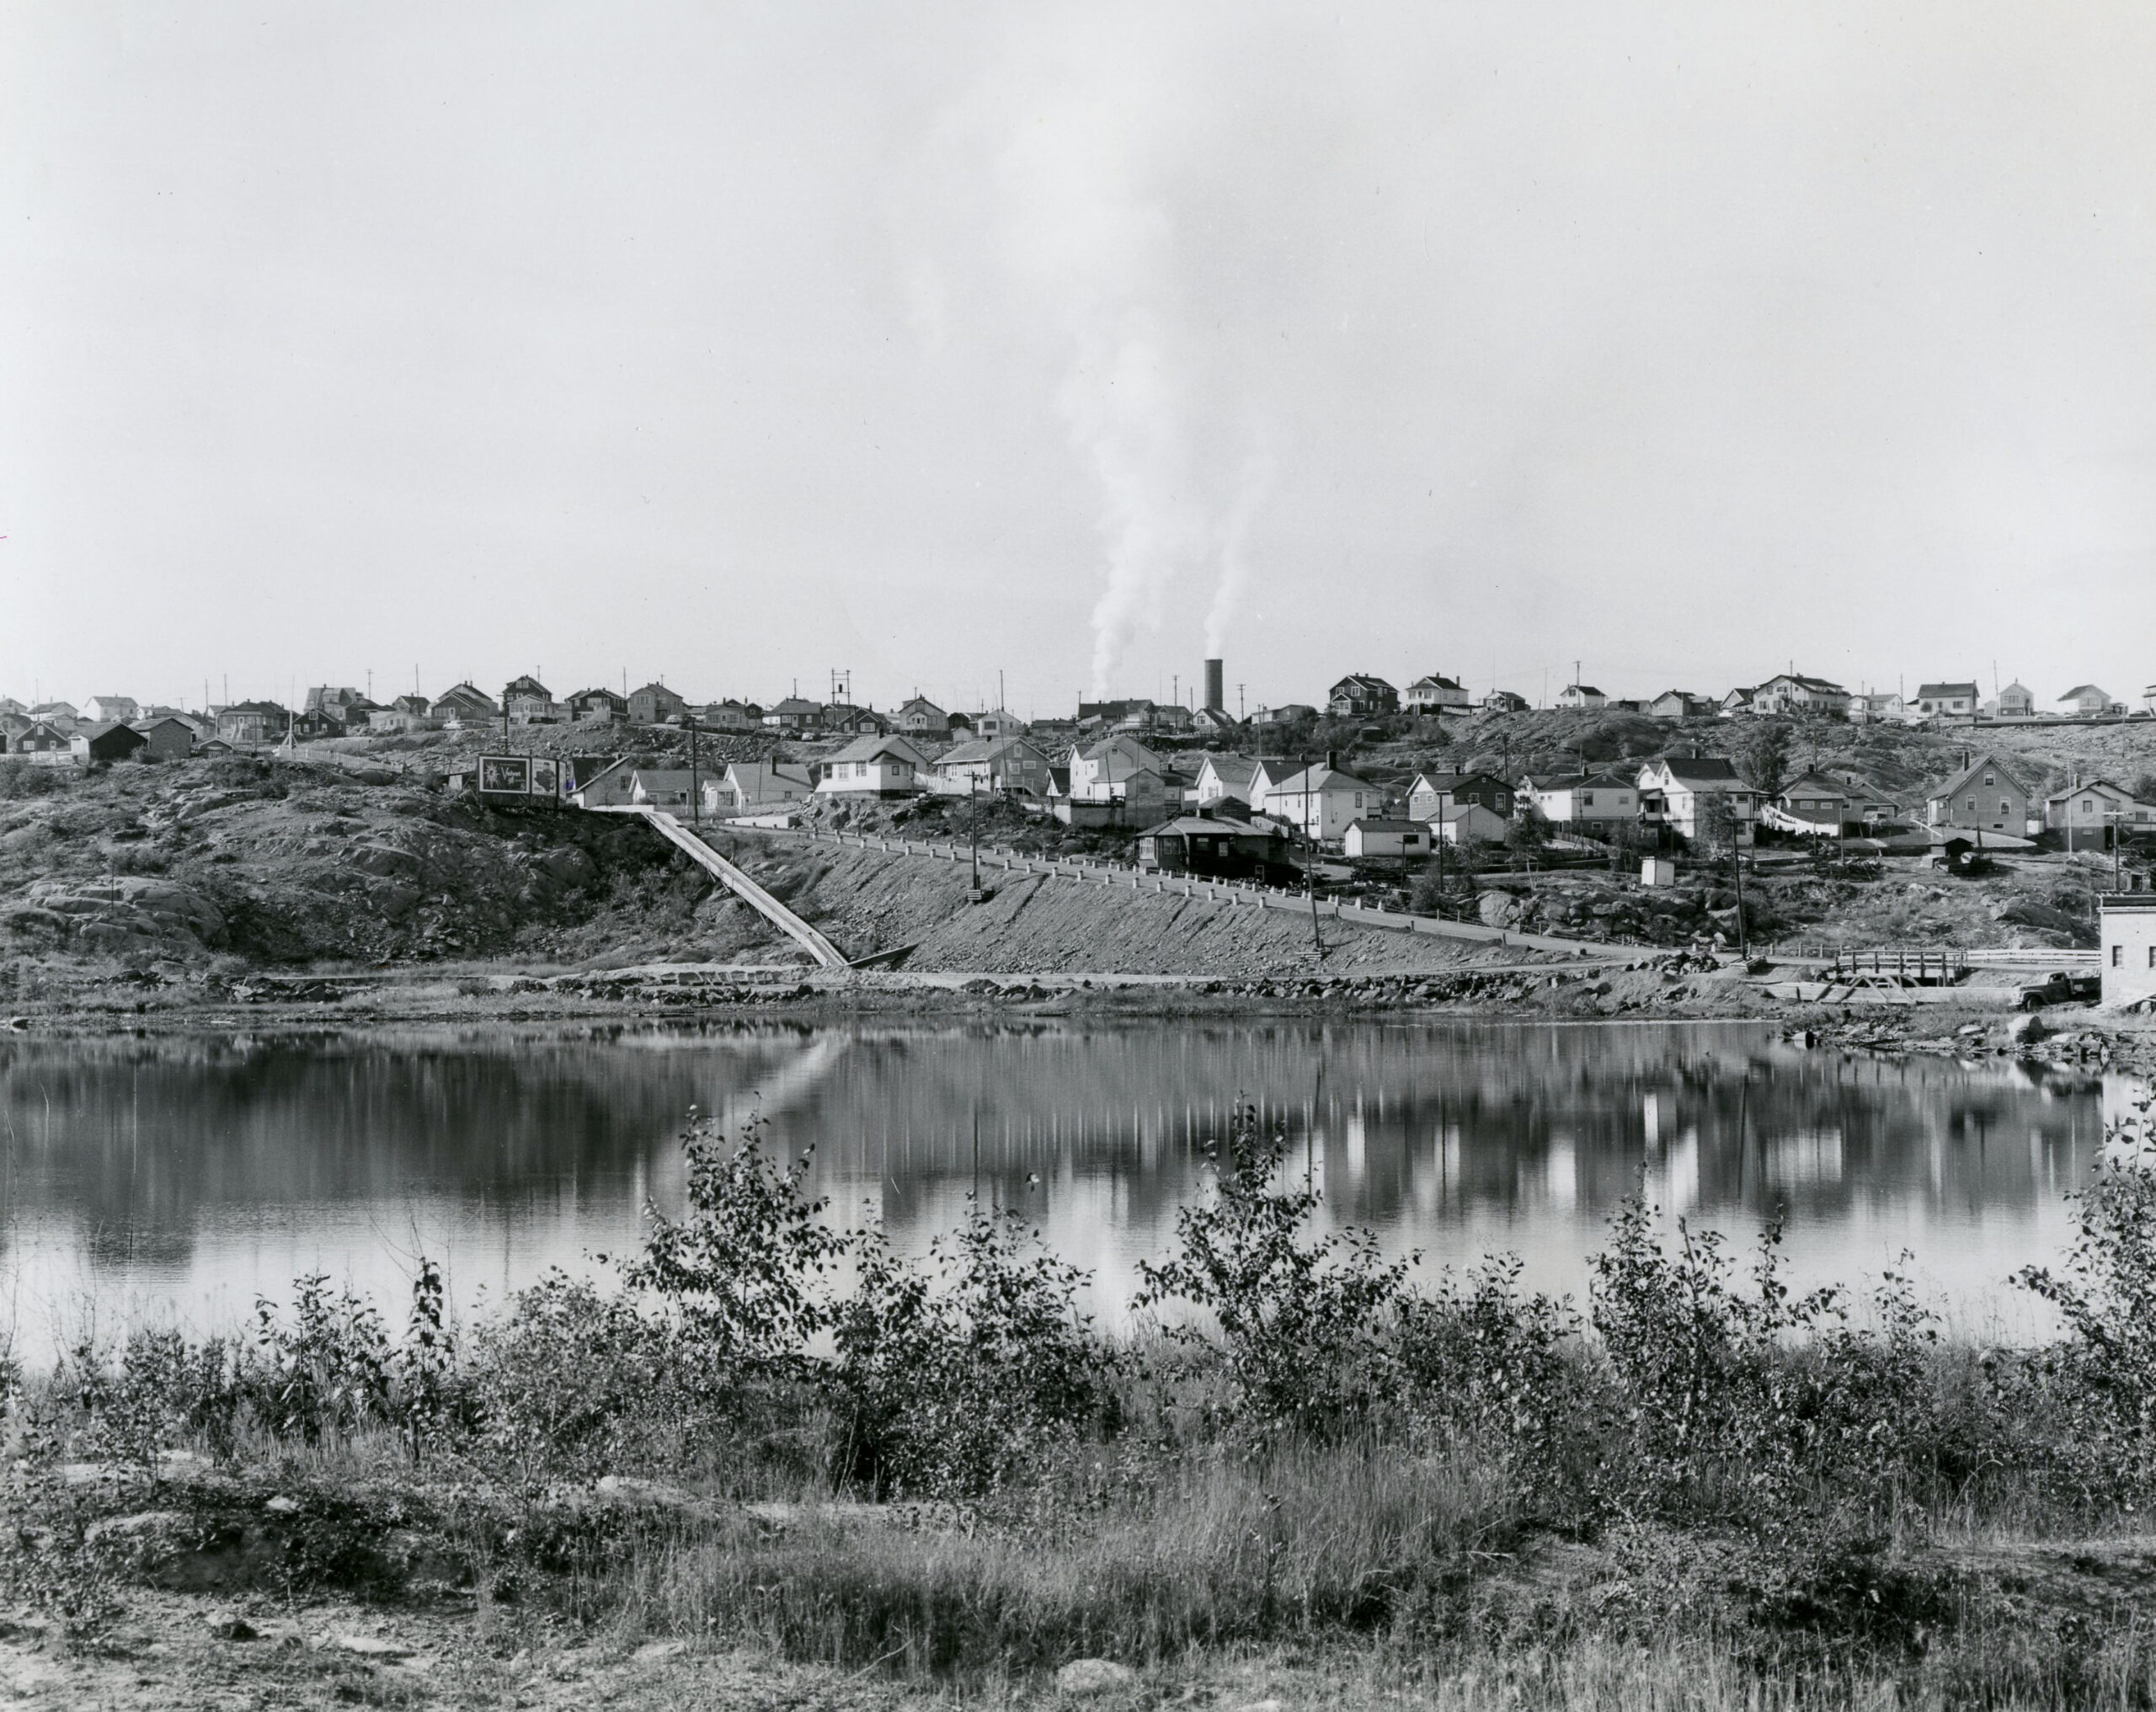 The mining town of Flin Flon, Manitoba in 1966